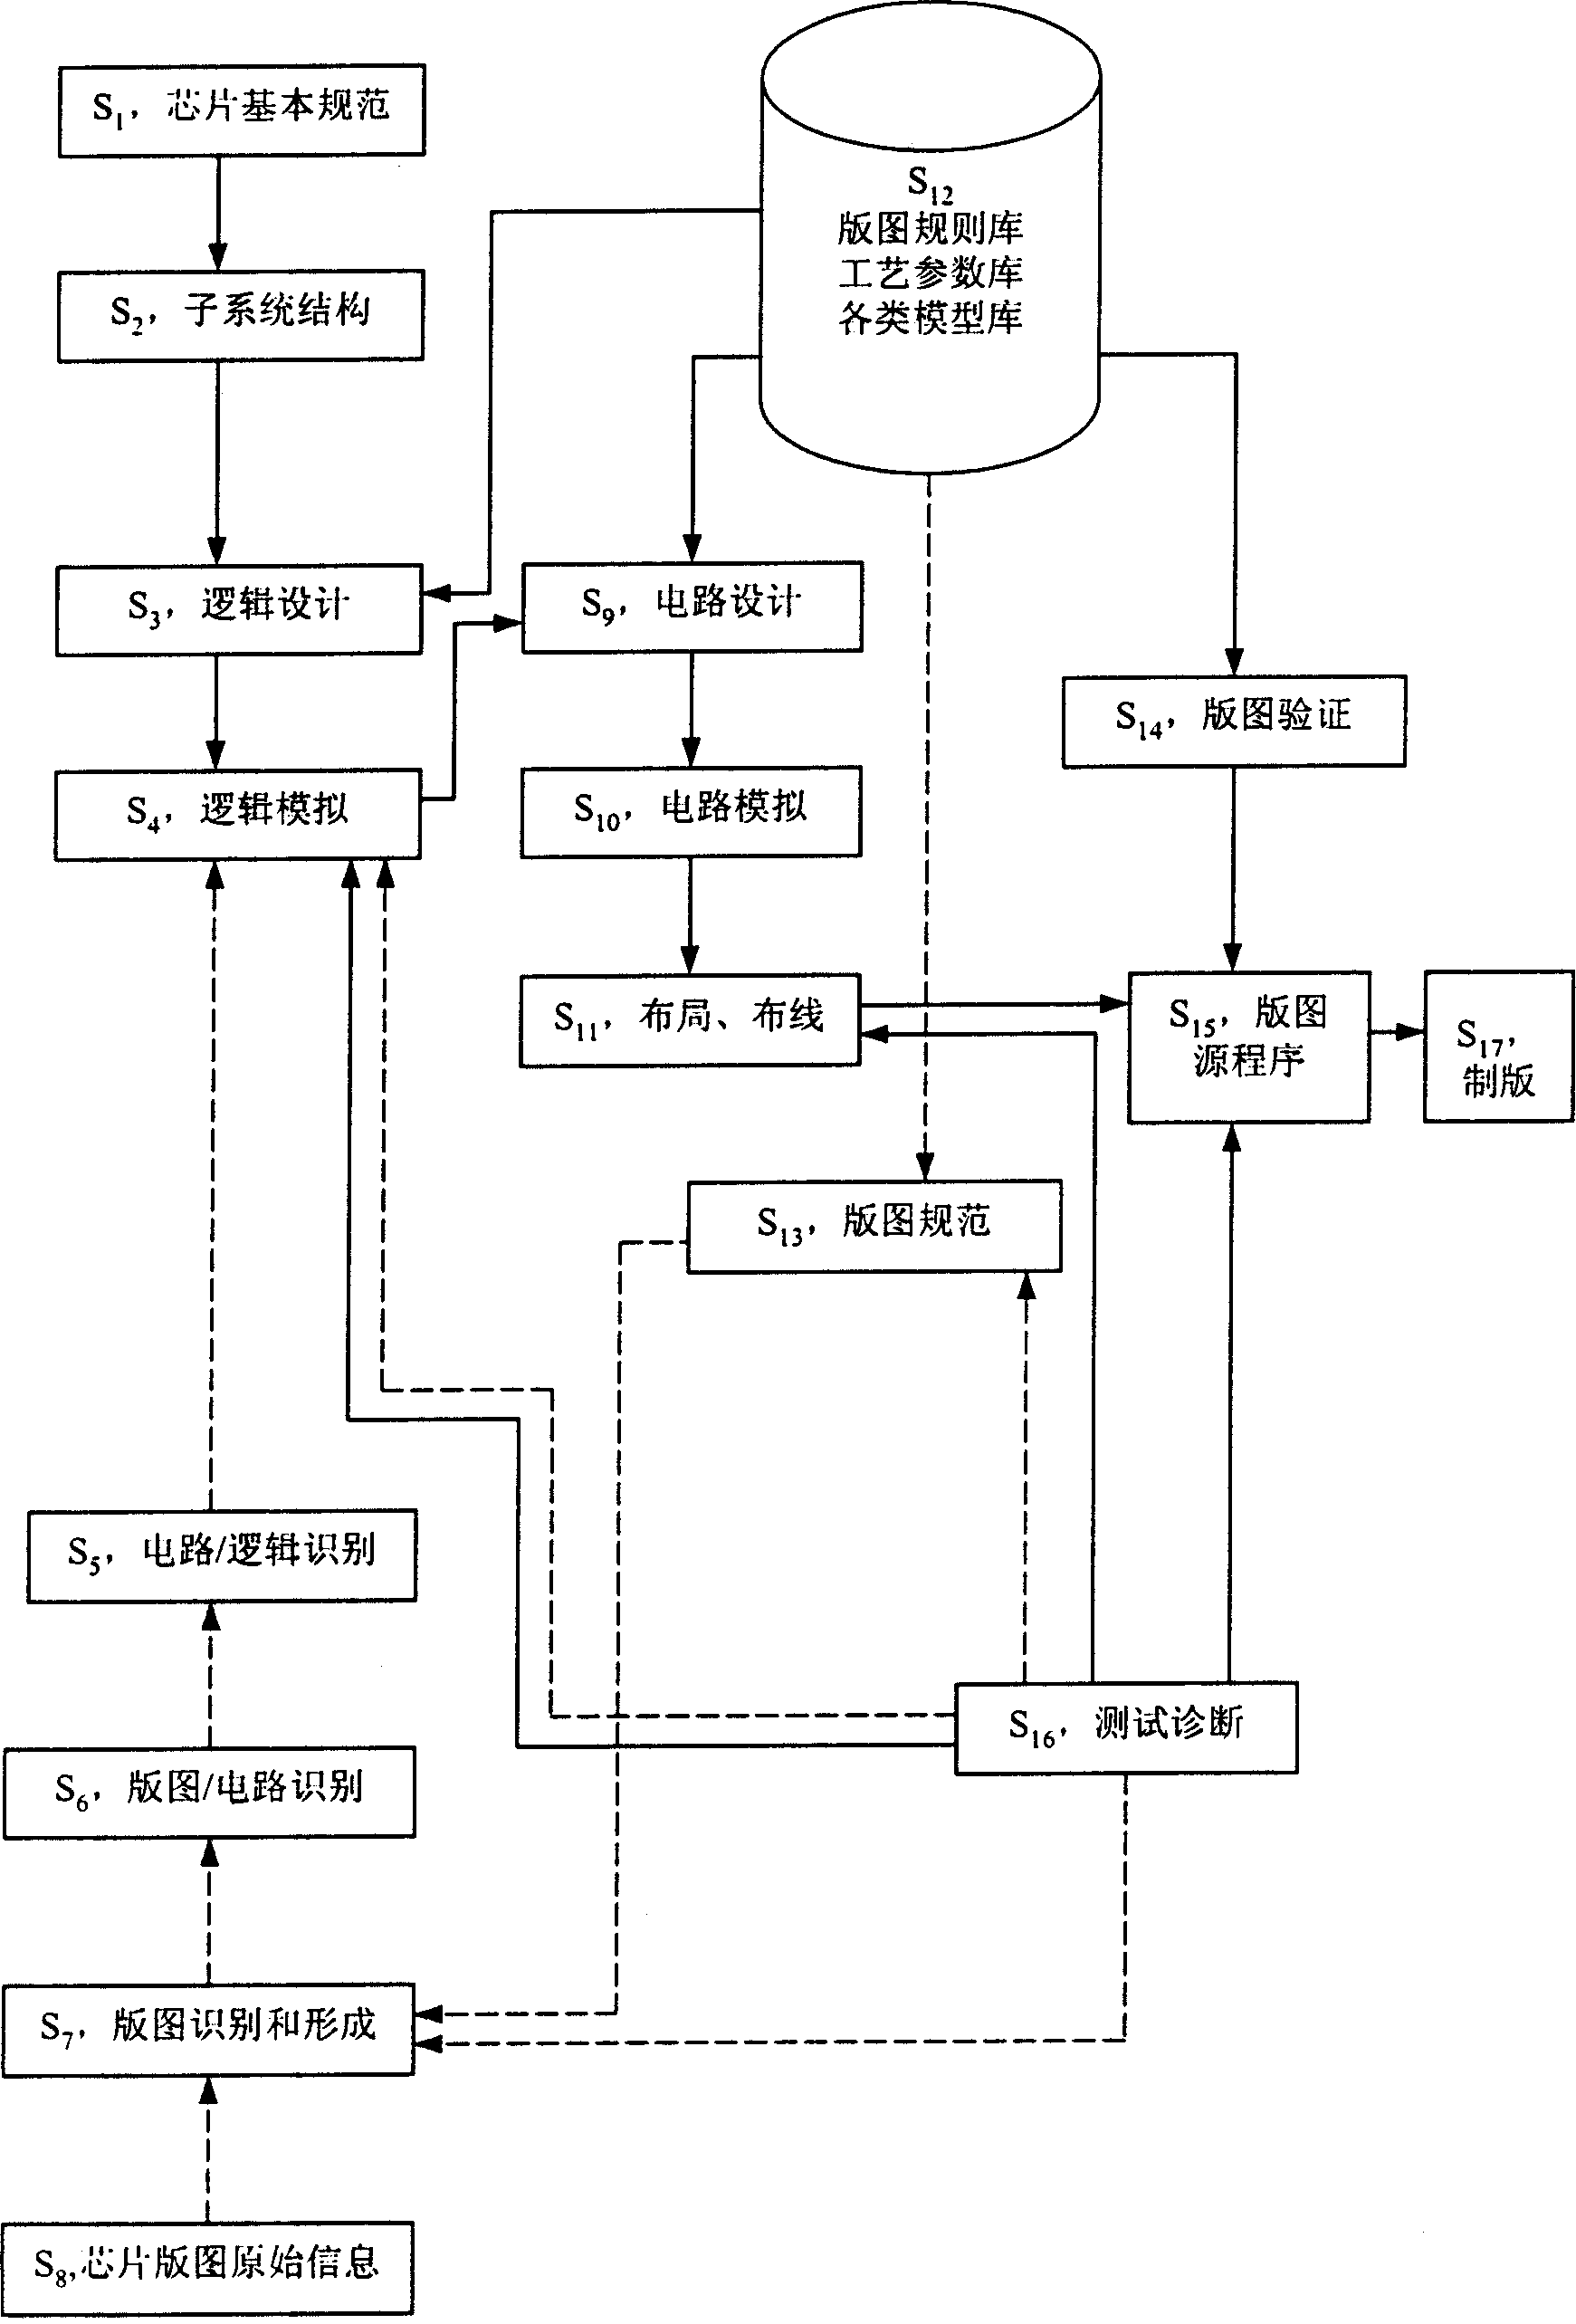 Bidirectional technique system of integrated circuit design